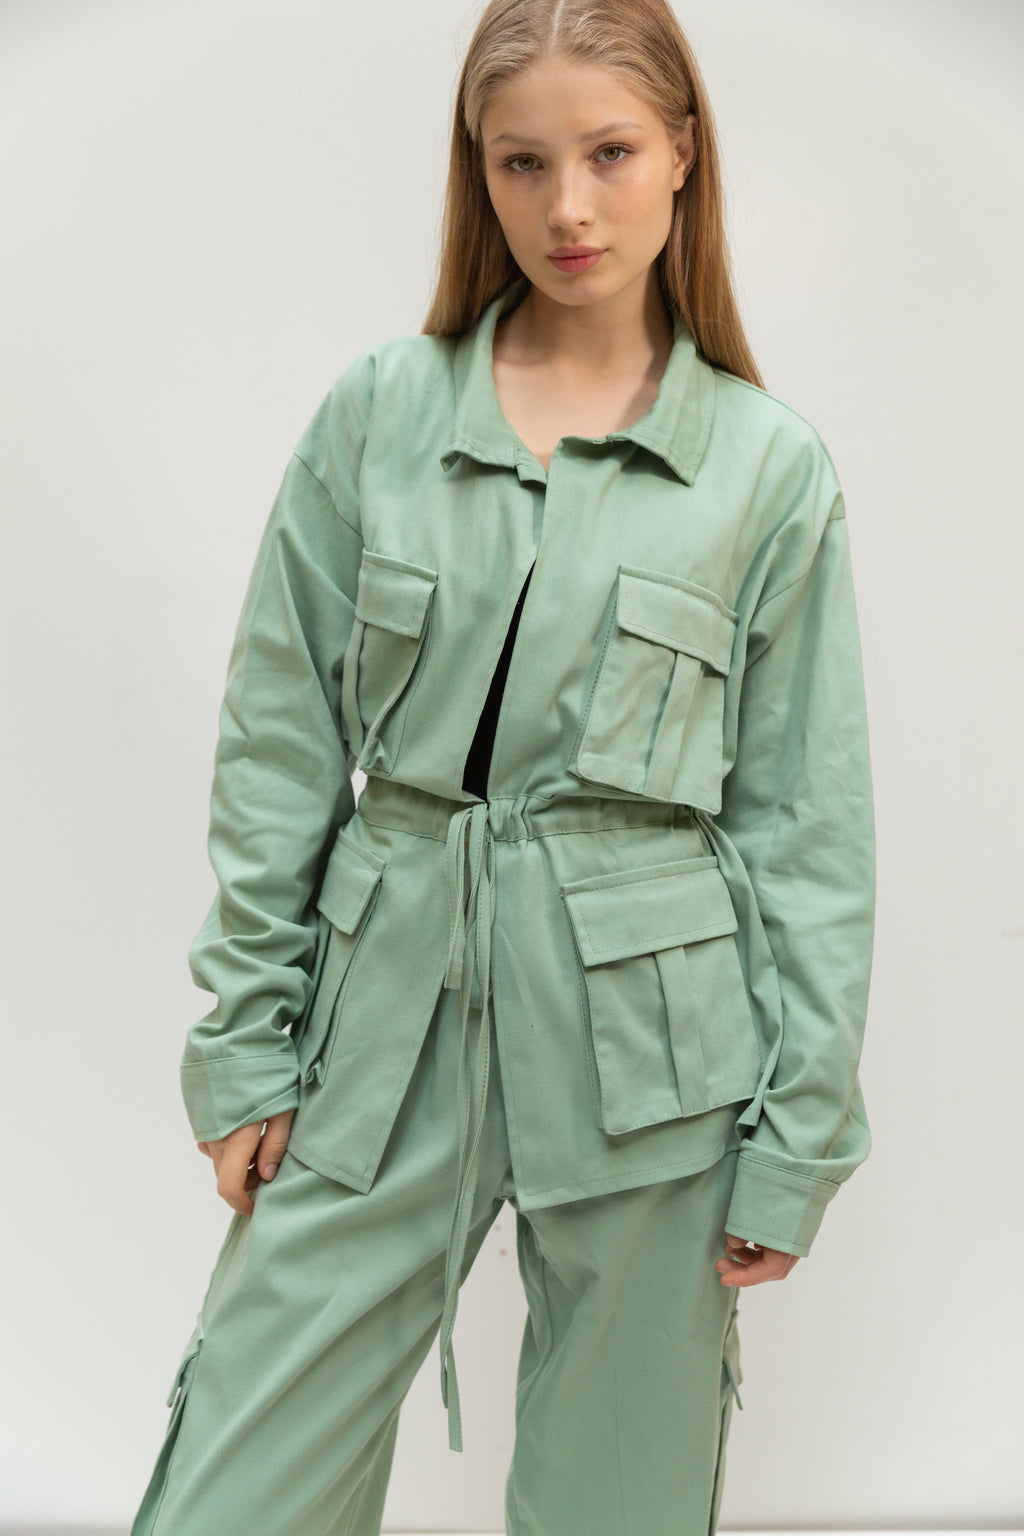 Army jacket in mint